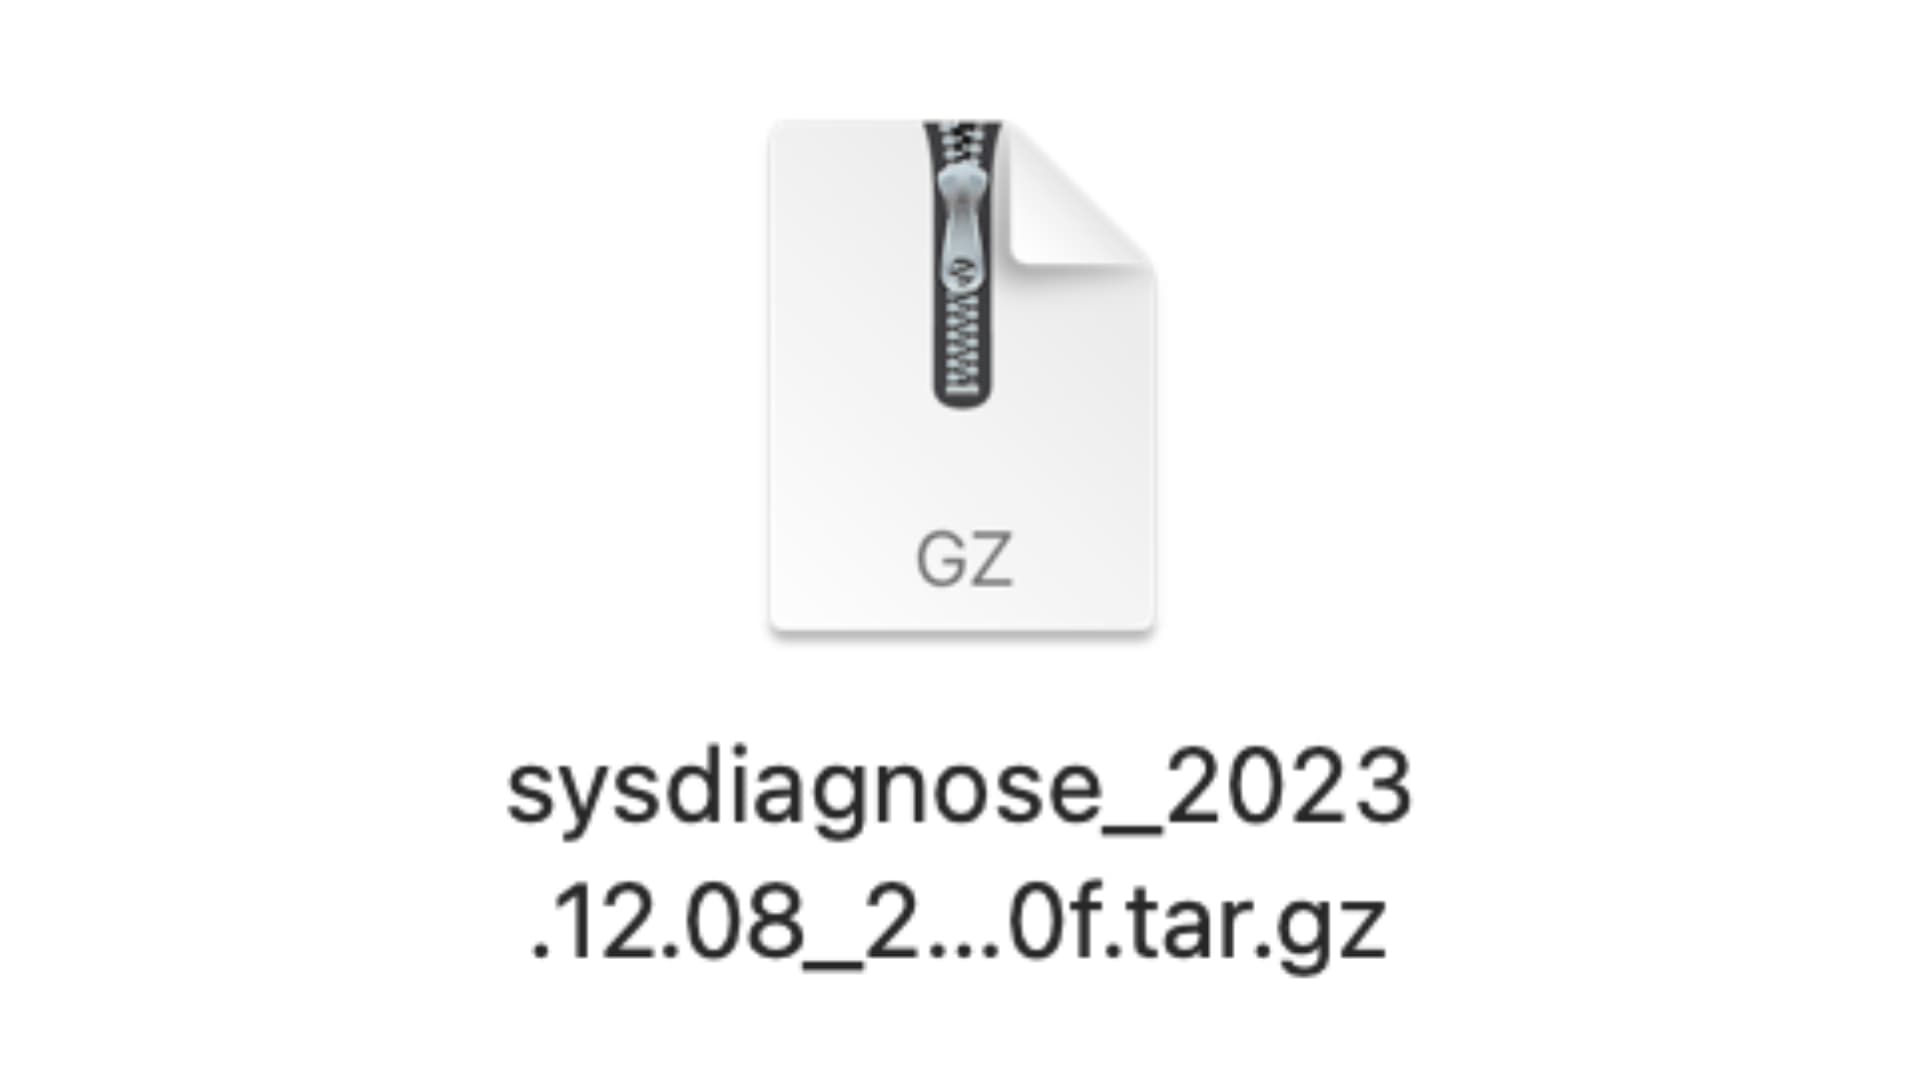 Mac sysdiagnose file